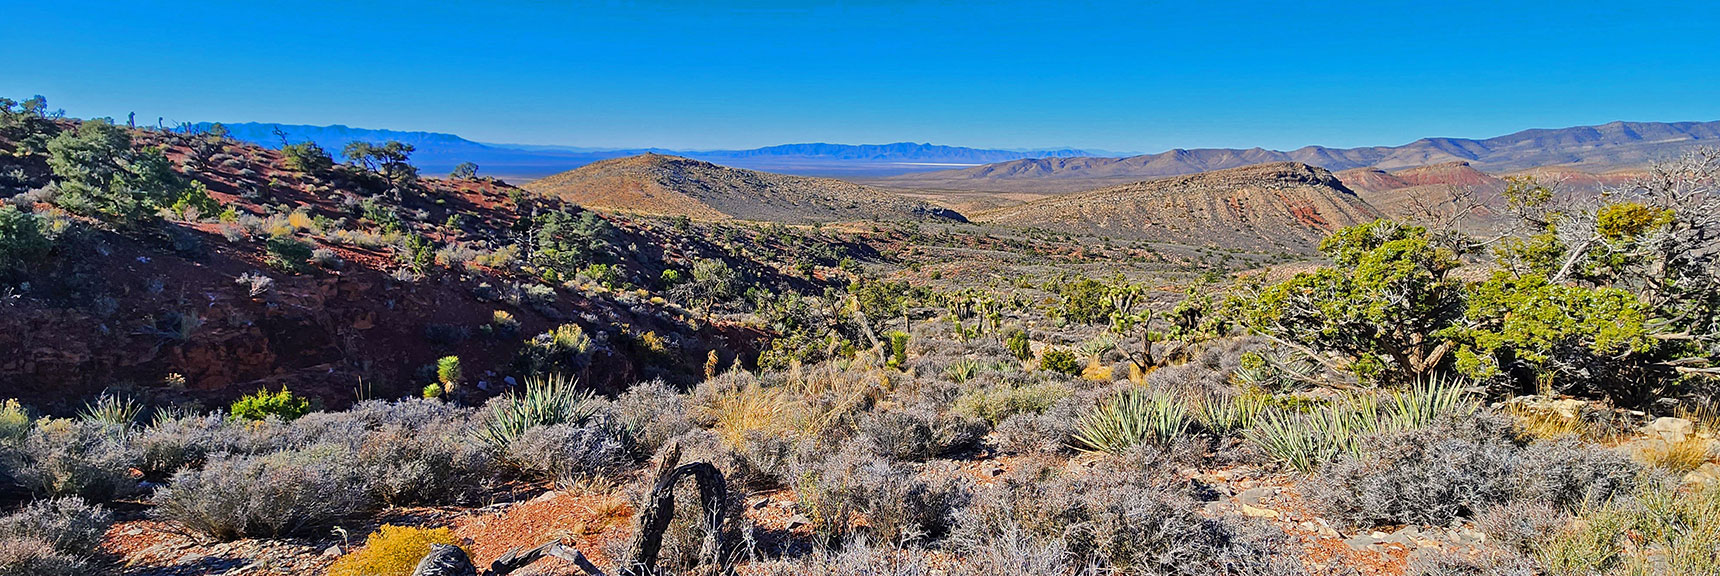 Stark Lower Western Desert Creates Sharp Contrast to Mountain Pines and Junipers. | Landmark Bluff Circuit | Lovell Canyon, Nevada